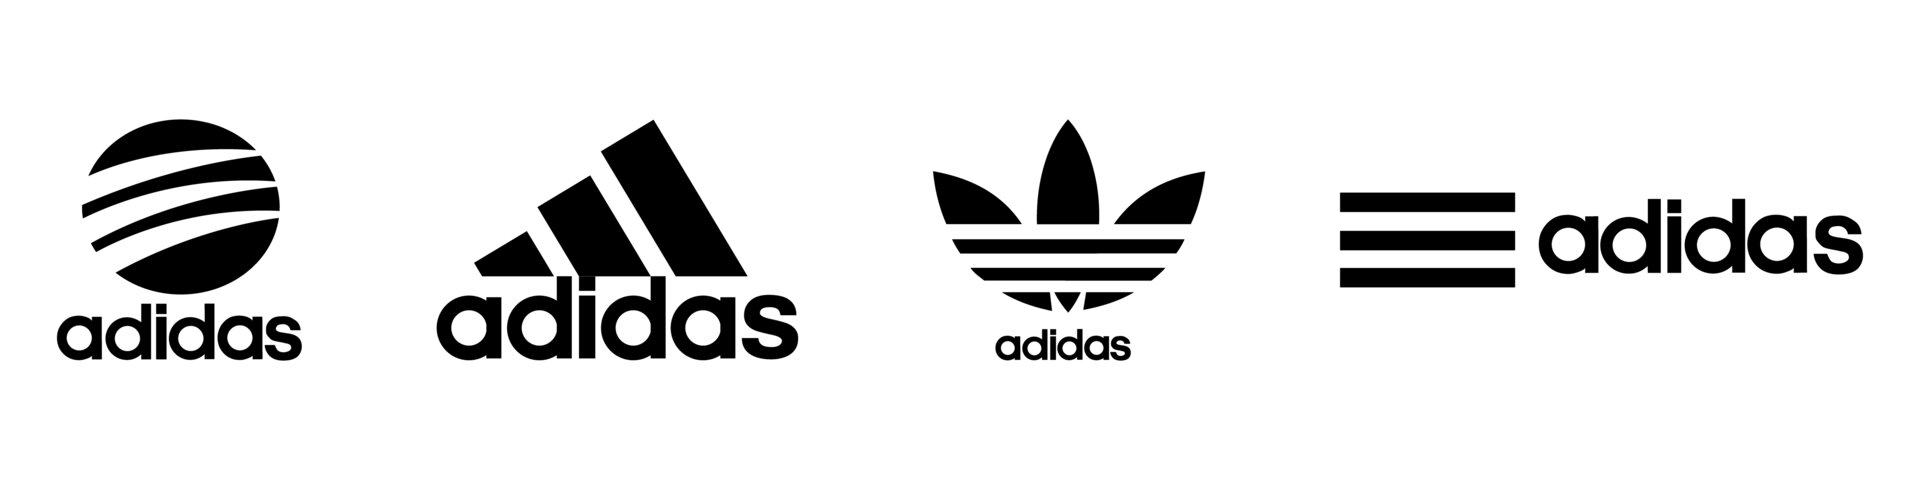 Adidas-Logo-Set.